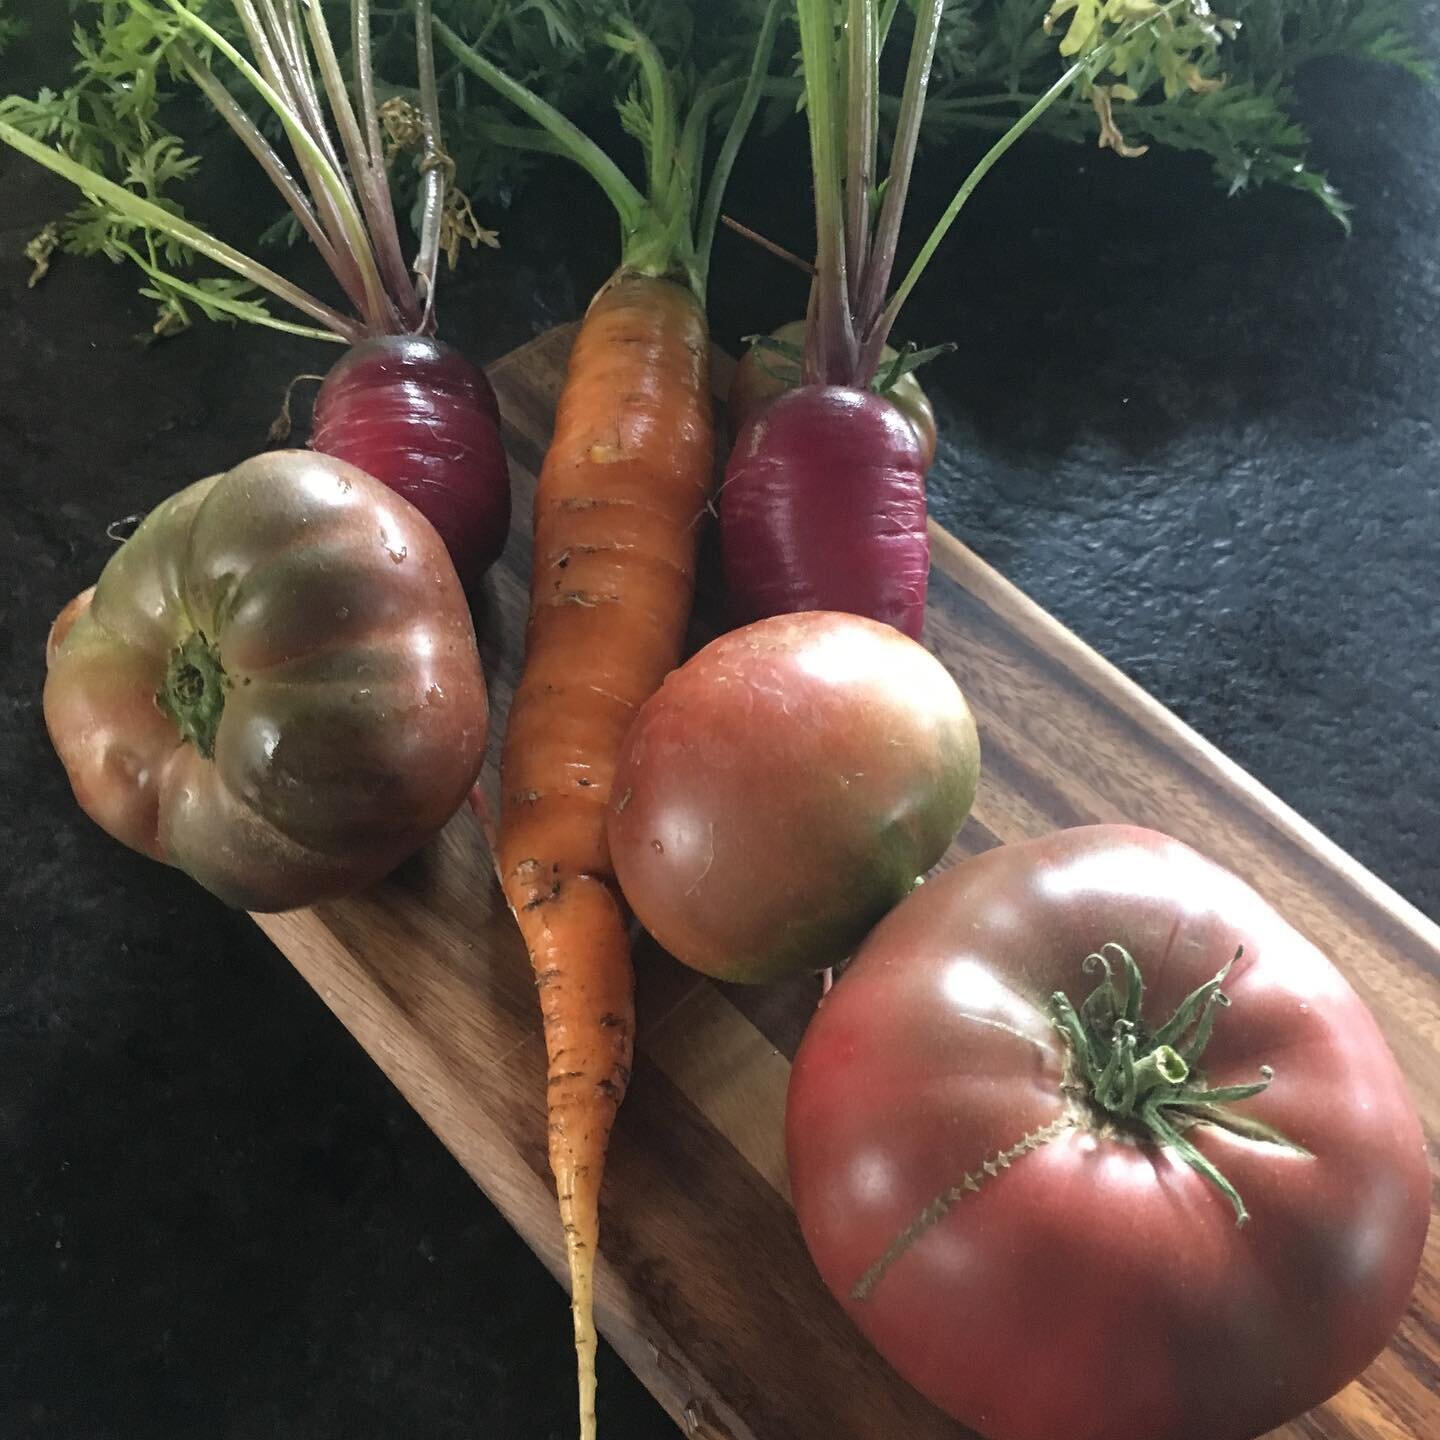 The vegetables of my labors 🥕 🍅 
.
.
.
#vegetables #organic #organicgardening #organicfood #organicfarming #farm #montana #montanalife #montanafarmlife #montanagardening #carrots🥕 #carrots #tomatoes #tomatoes🍅 #bzn #bozeman #bozemanmontana #bozem